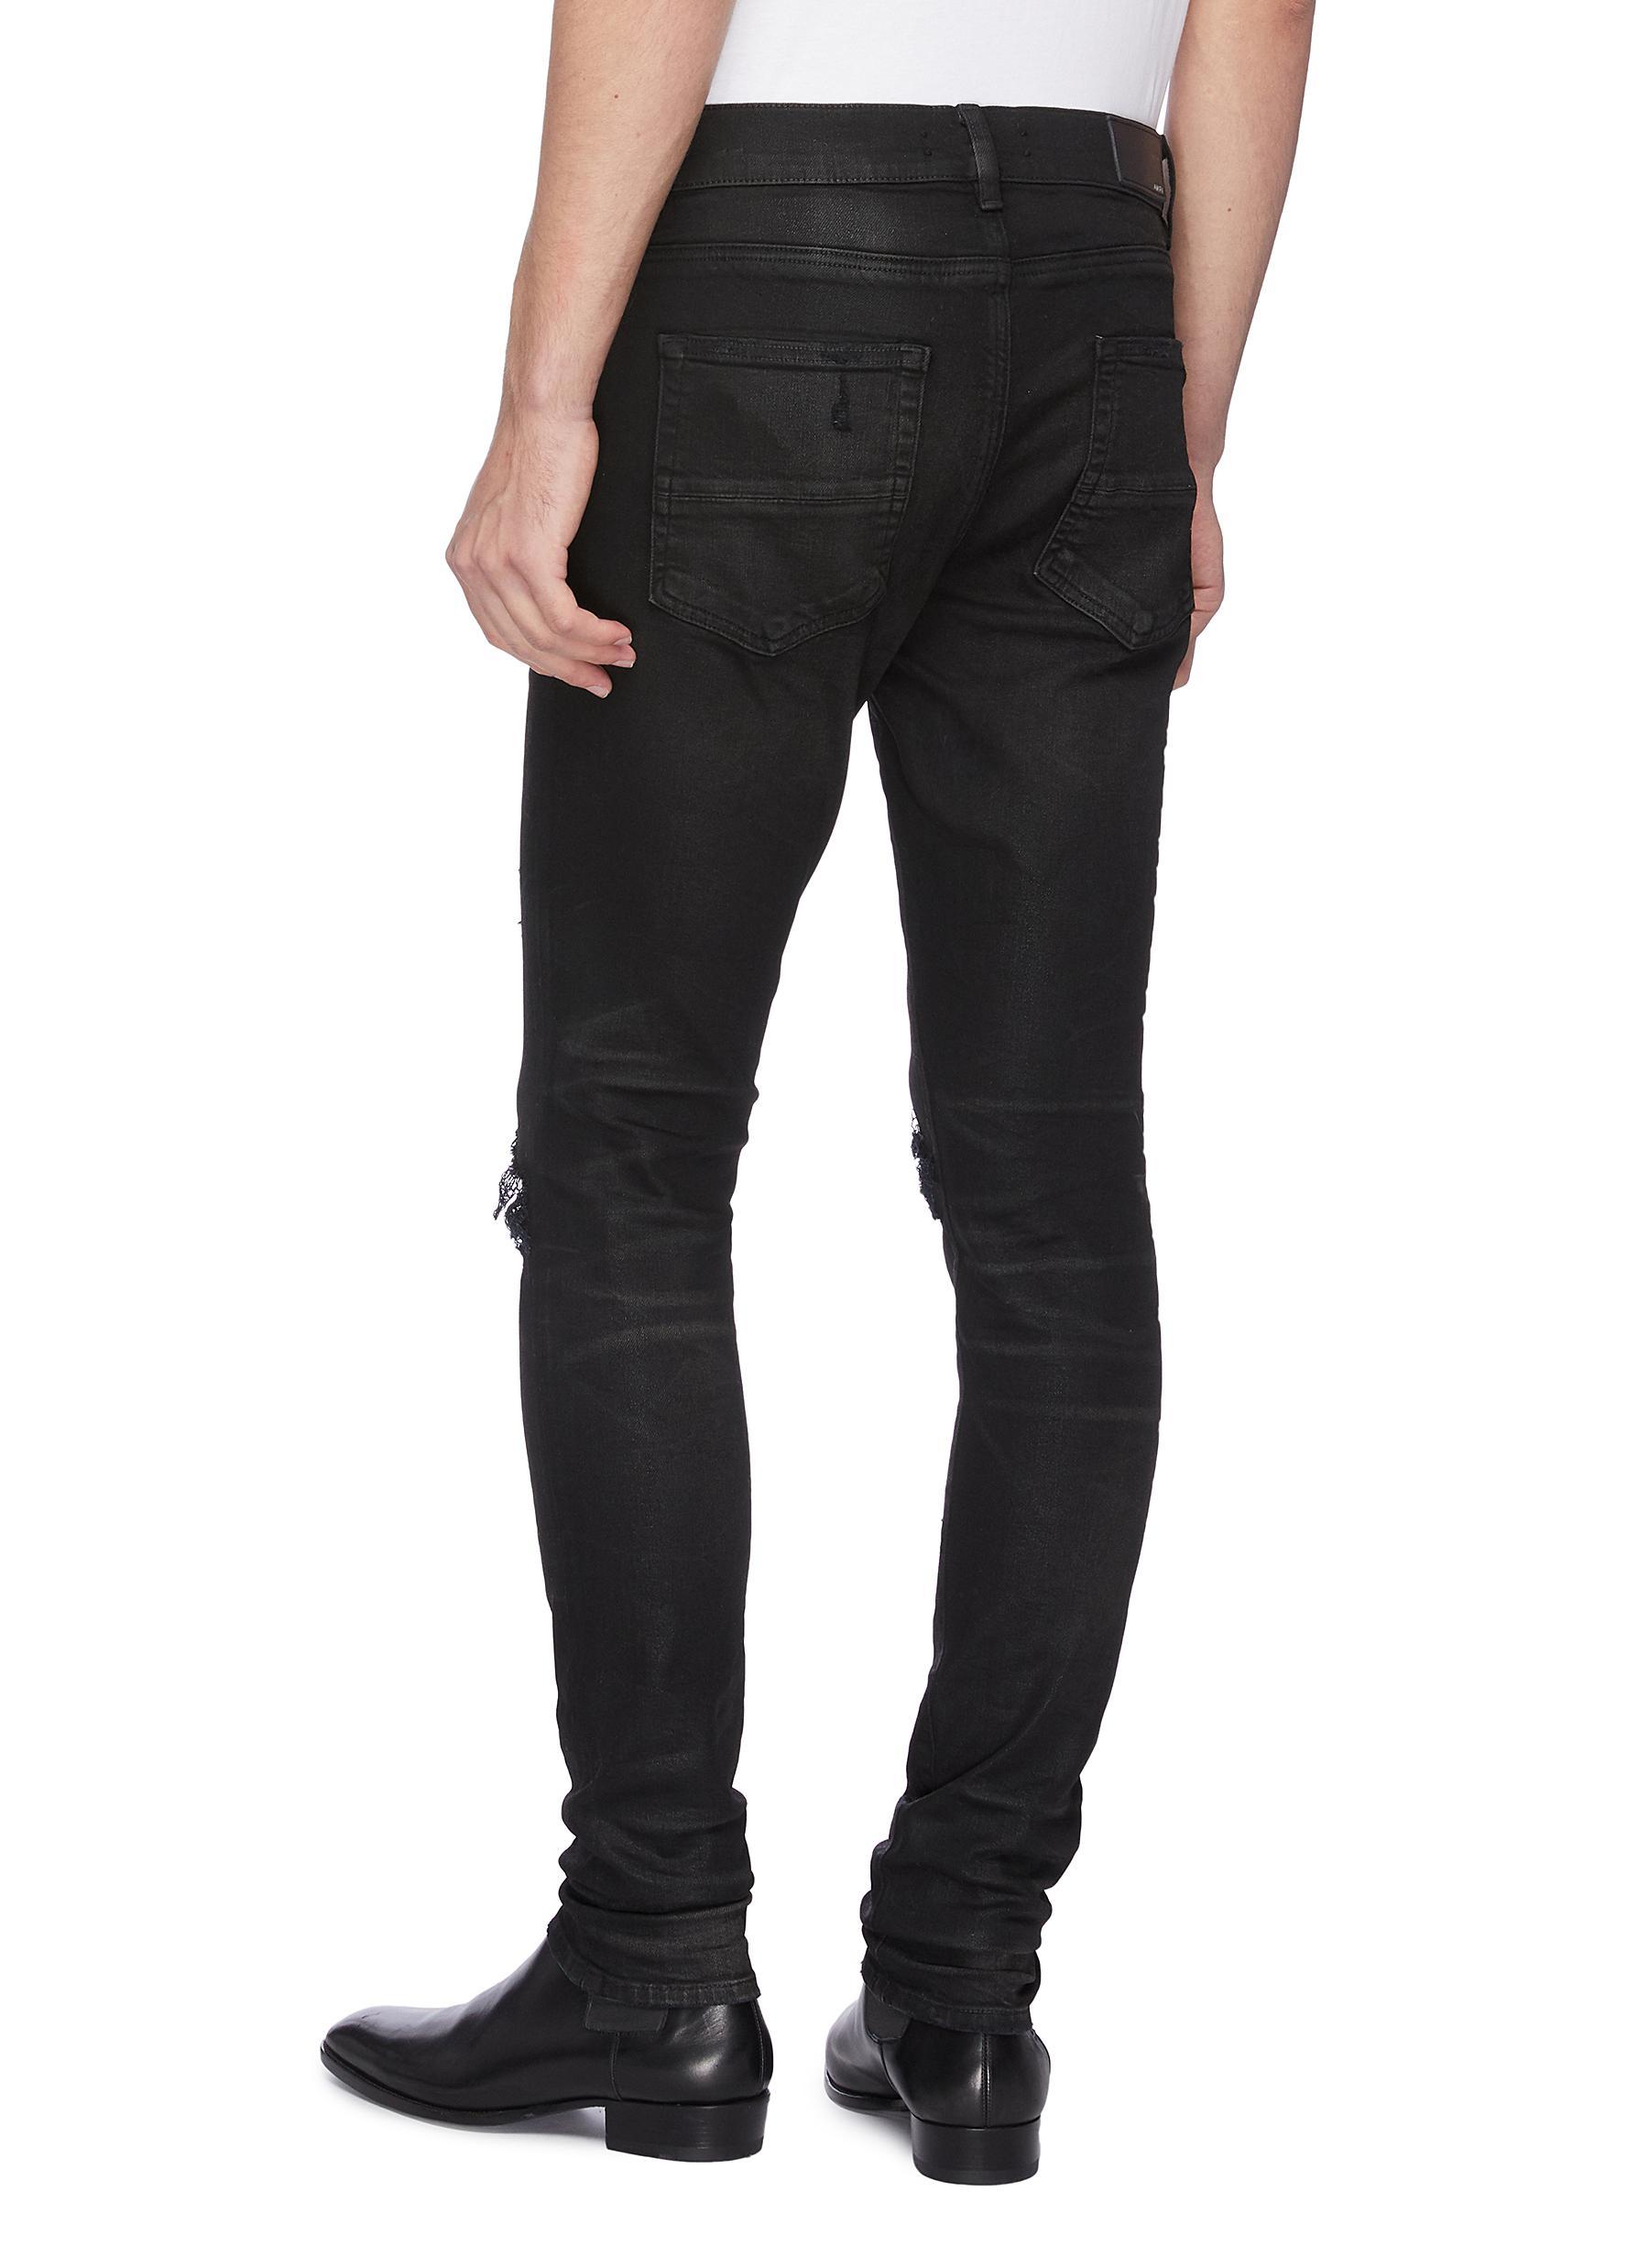 Amiri Denim 'thrasher Minimal' Ripped Jeans in Black for Men - Lyst